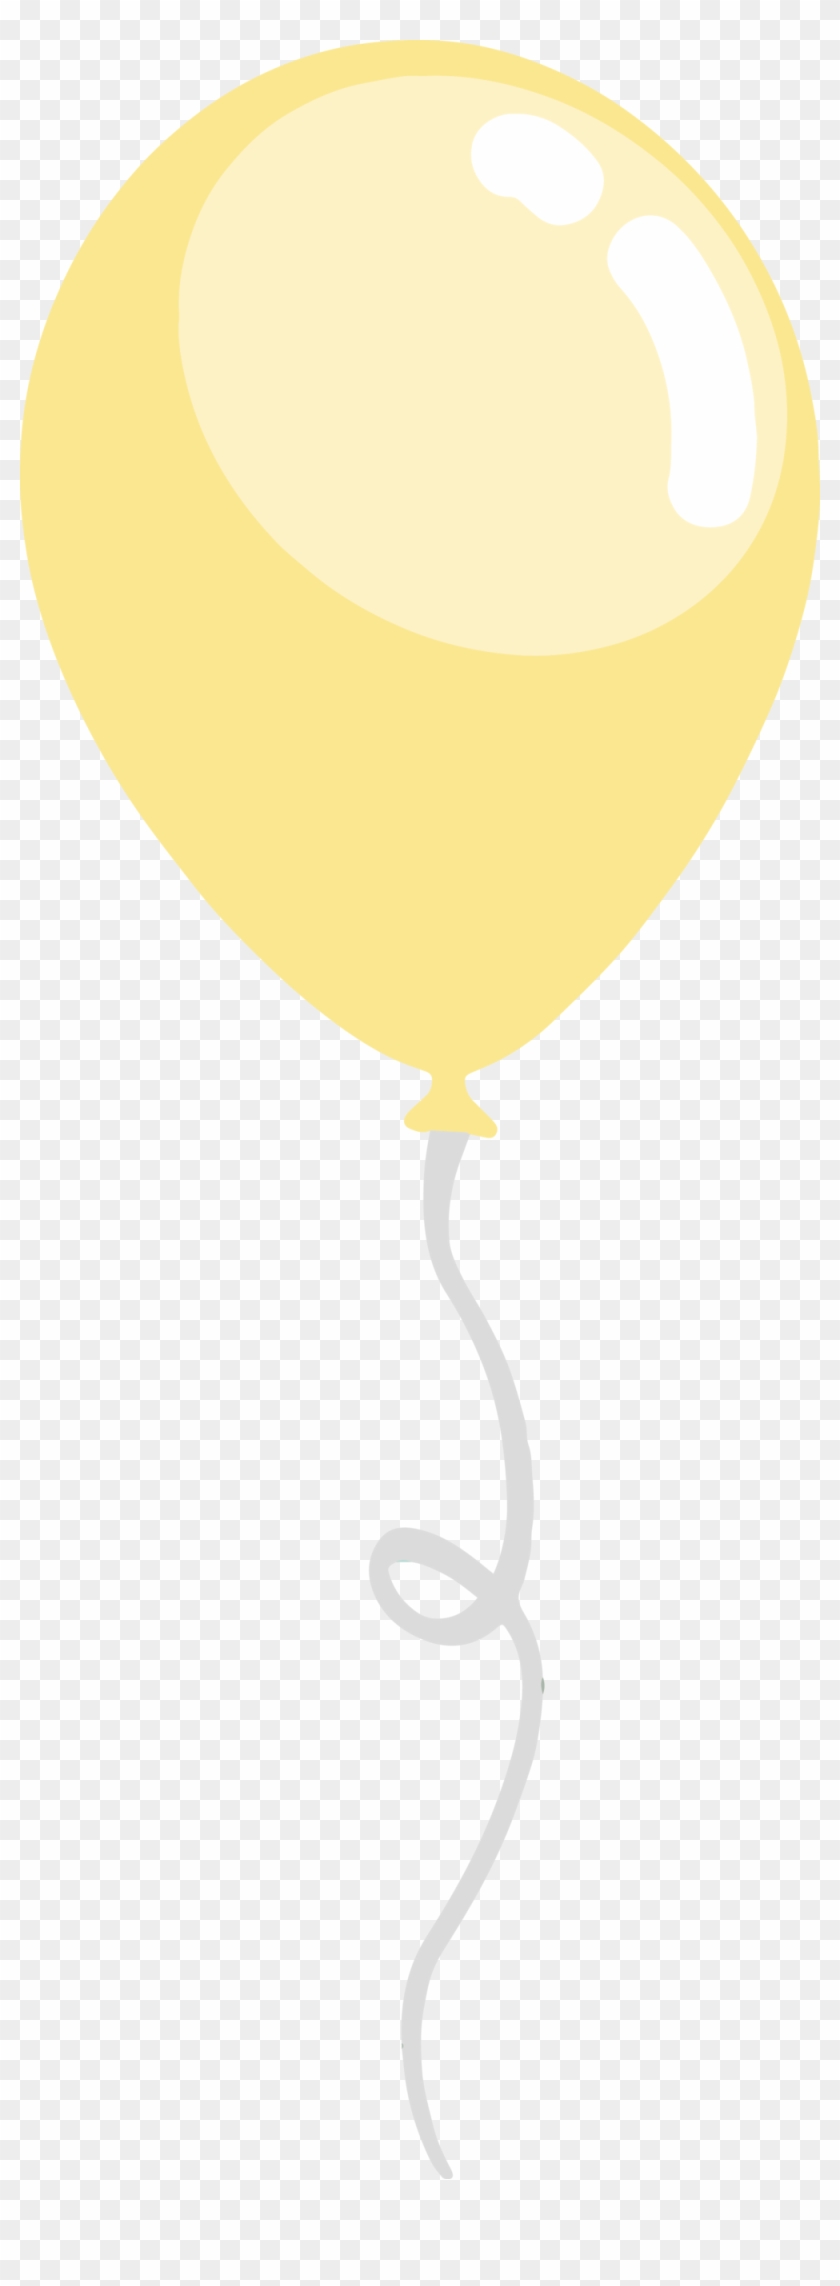 Balloon - Pastel Yellow Balloons Png #603926